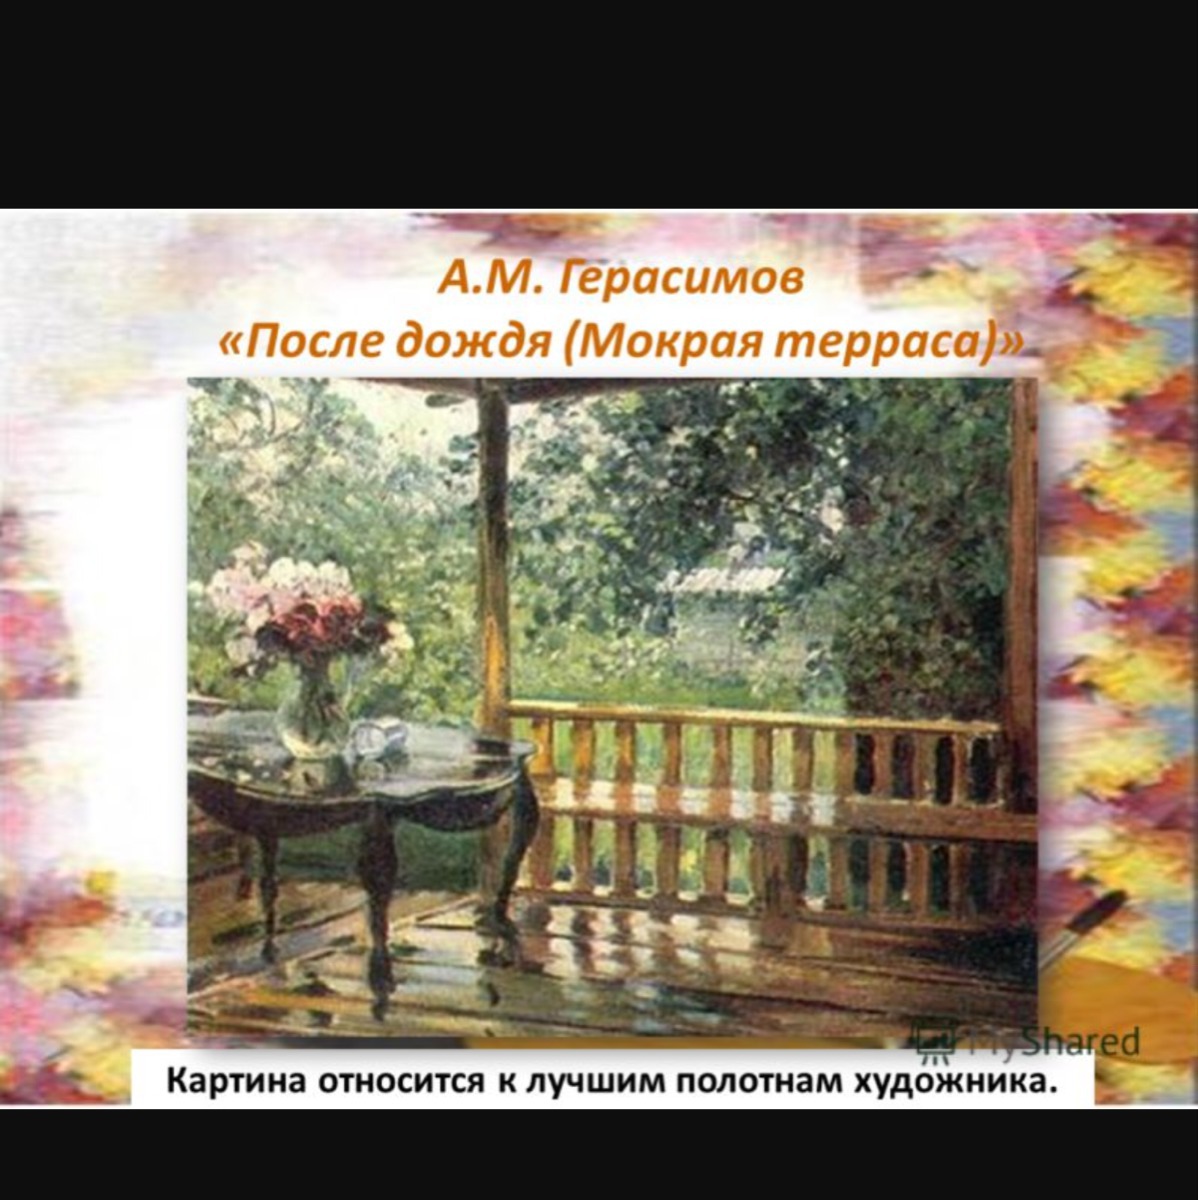 Произведения герасимова. А М Герасимов мокрая терраса. Картина Герасимова после дождя. А М Герасимов после дождя. А М Герасимов после дождя картина.